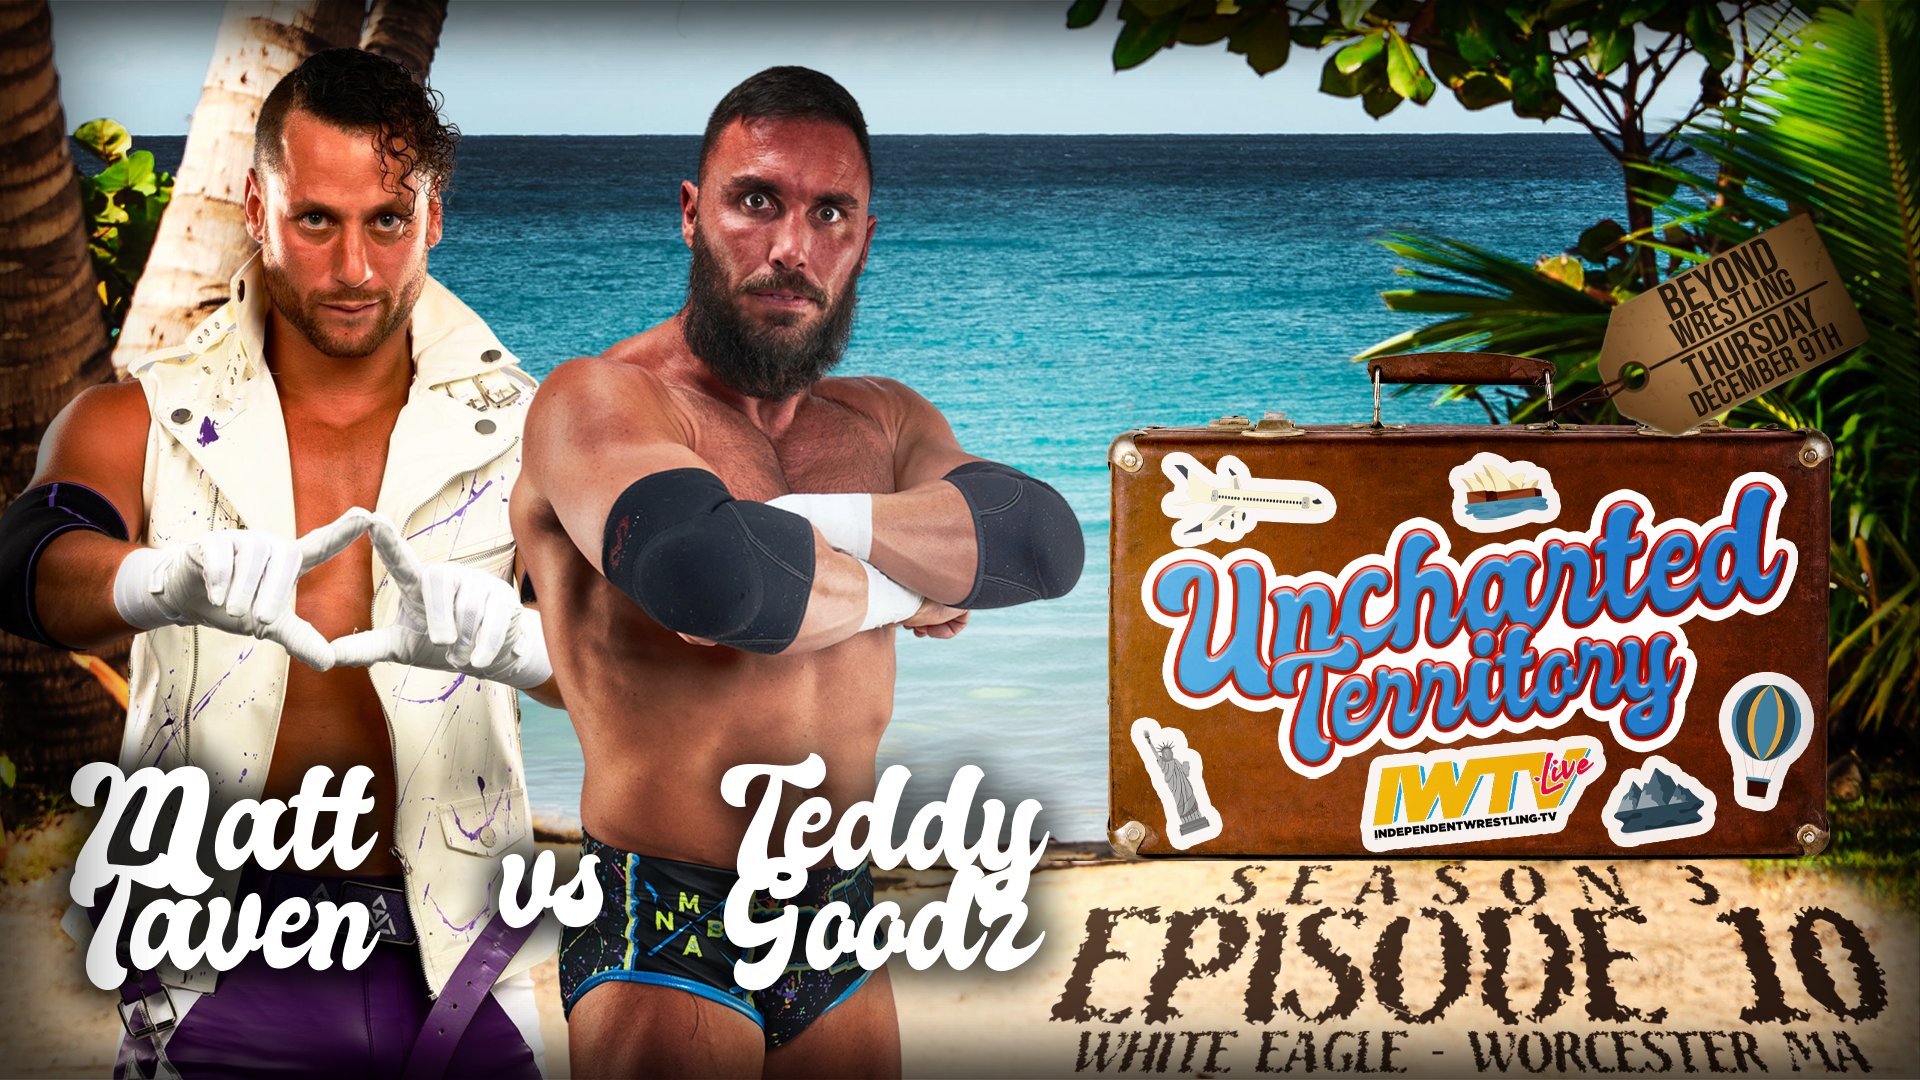 Beyond Wrestling Uncharted Territory Season 3 Episode 10 Matt Taven vs. Teddy Goodz